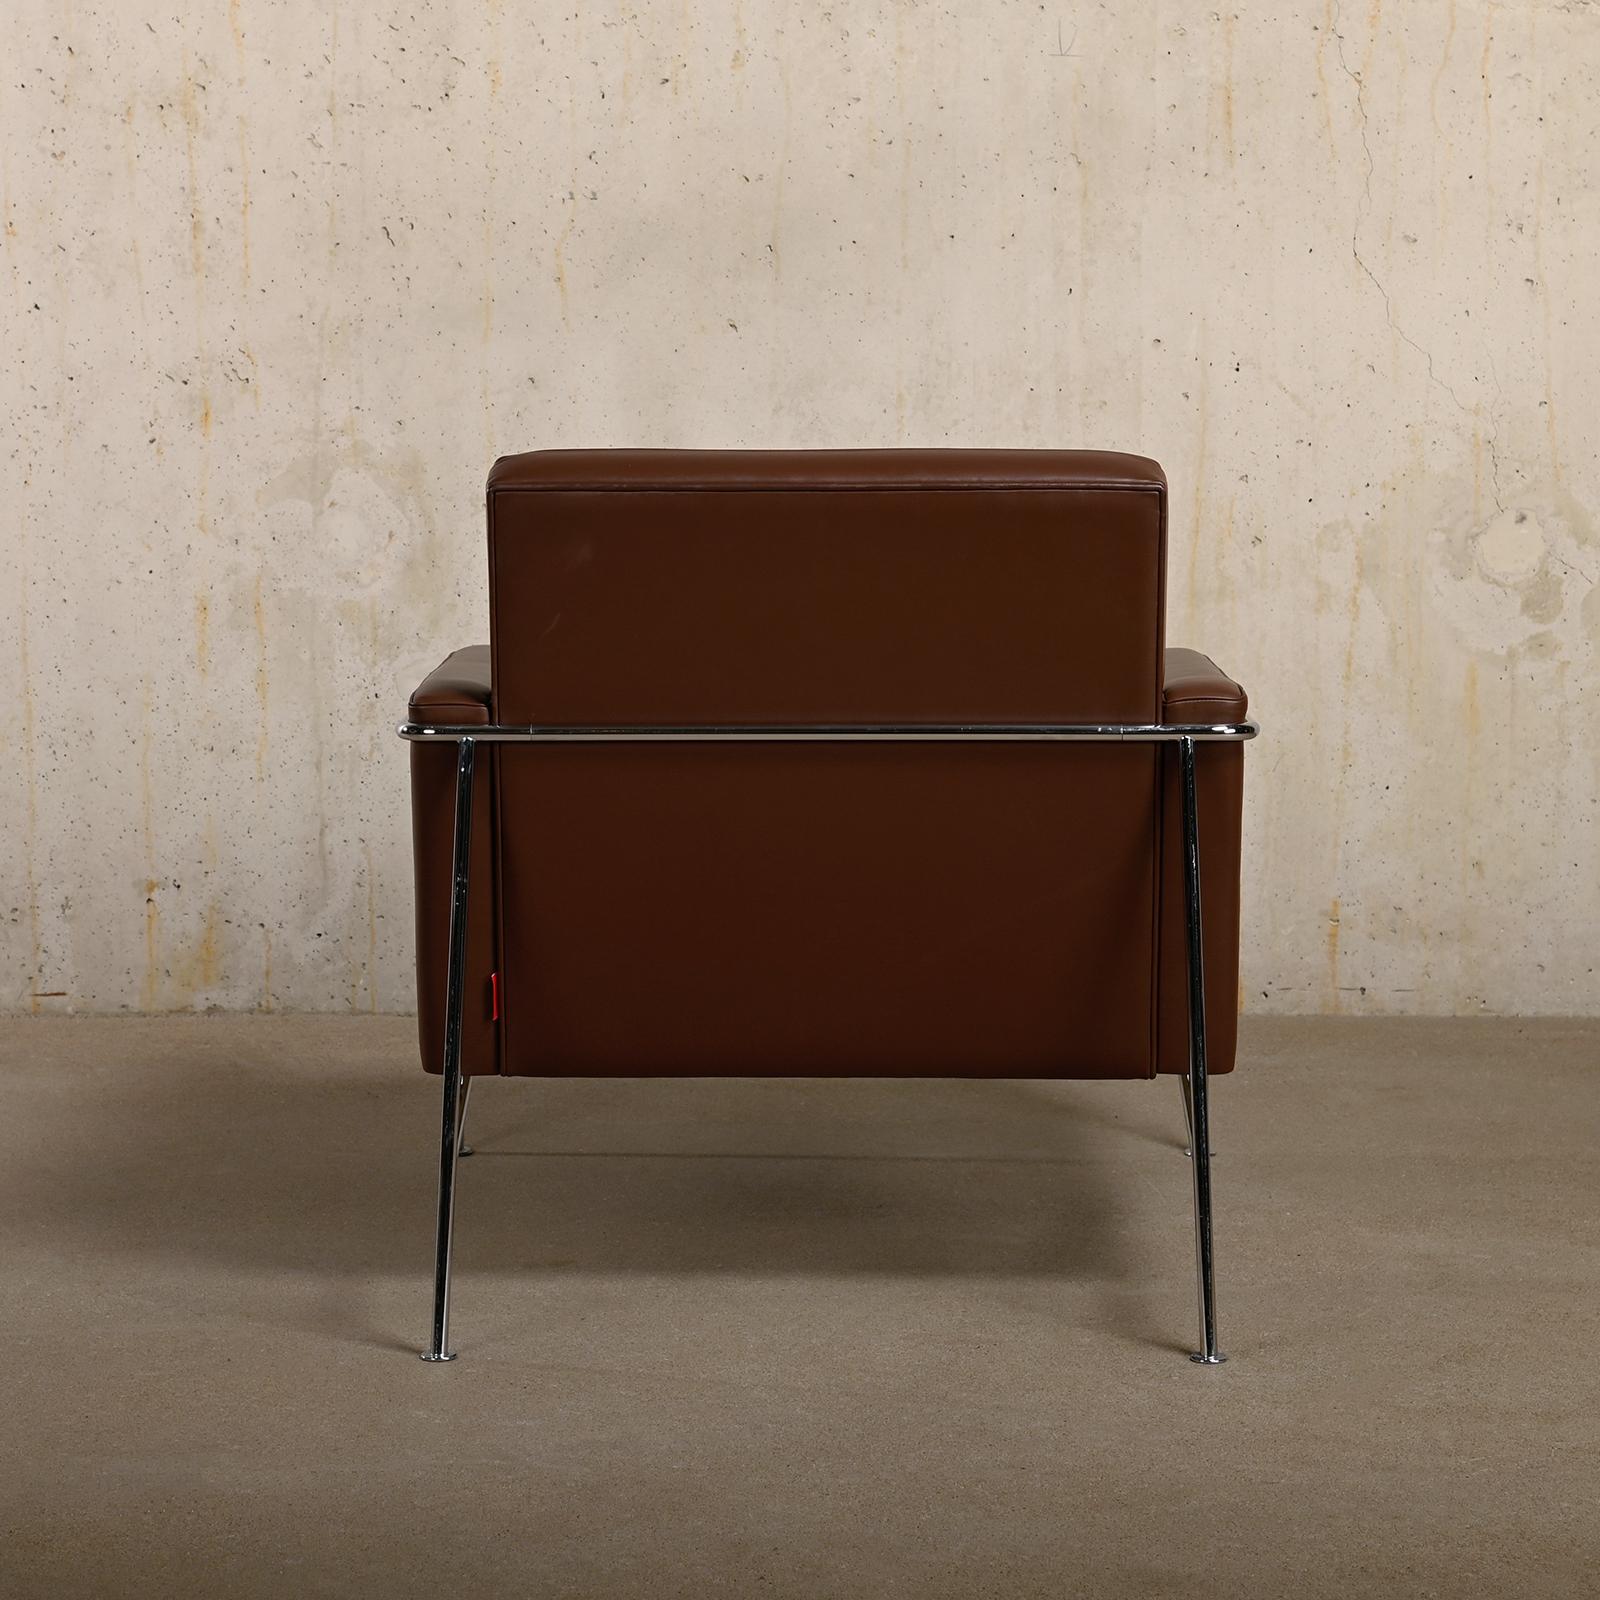 Danish Arne Jacobsen Lounge Chair 3300 Series in Chestnut leather for Fritz Hansen For Sale